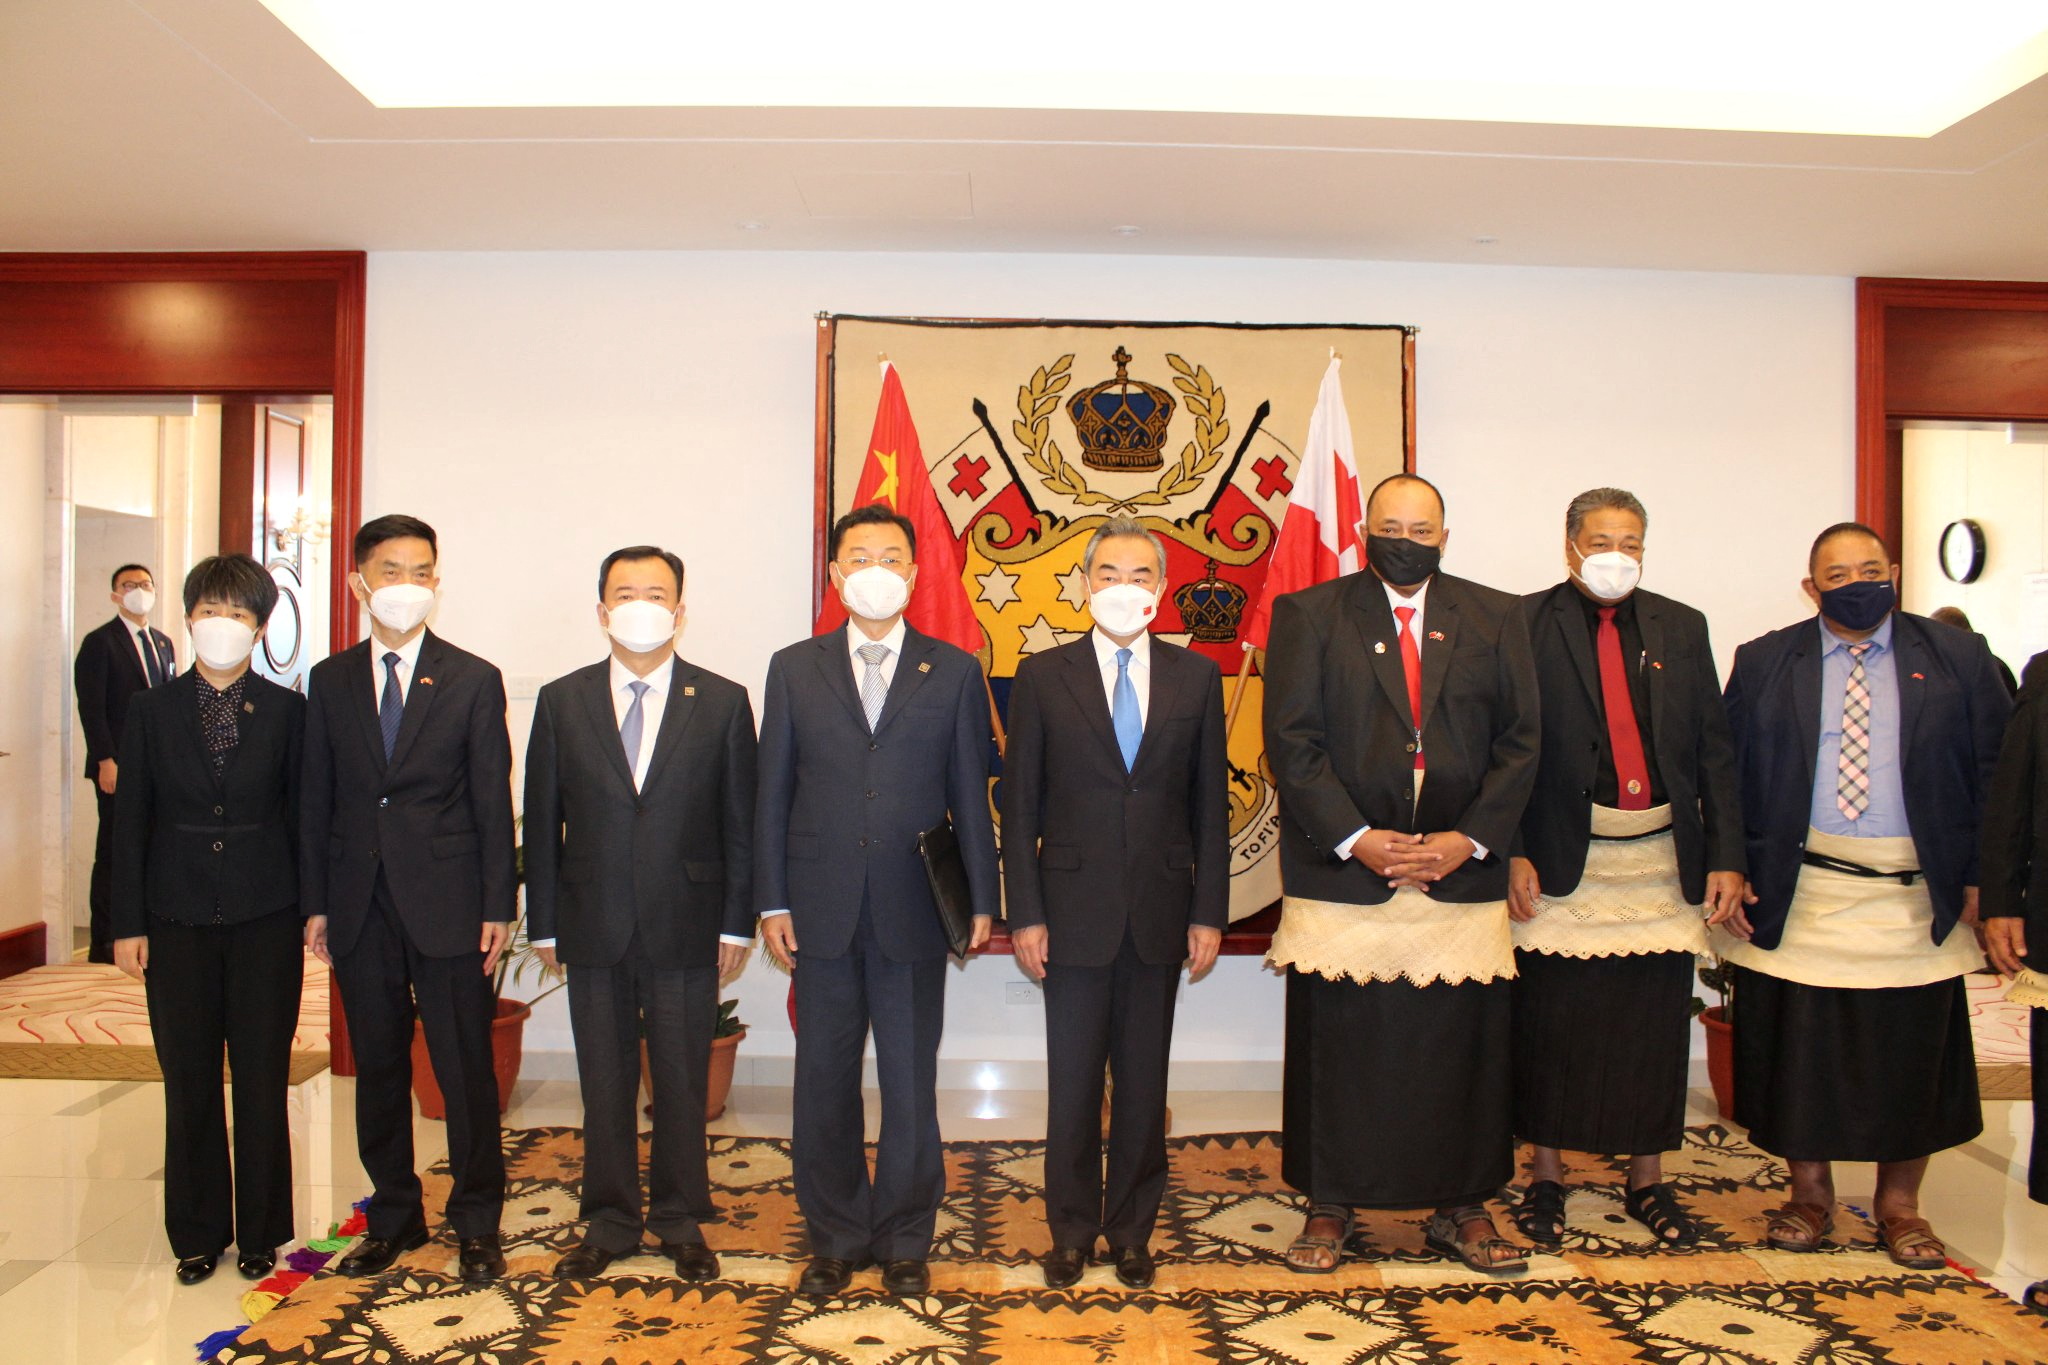 China's Foreign Minister Wang Yi visits Tonga